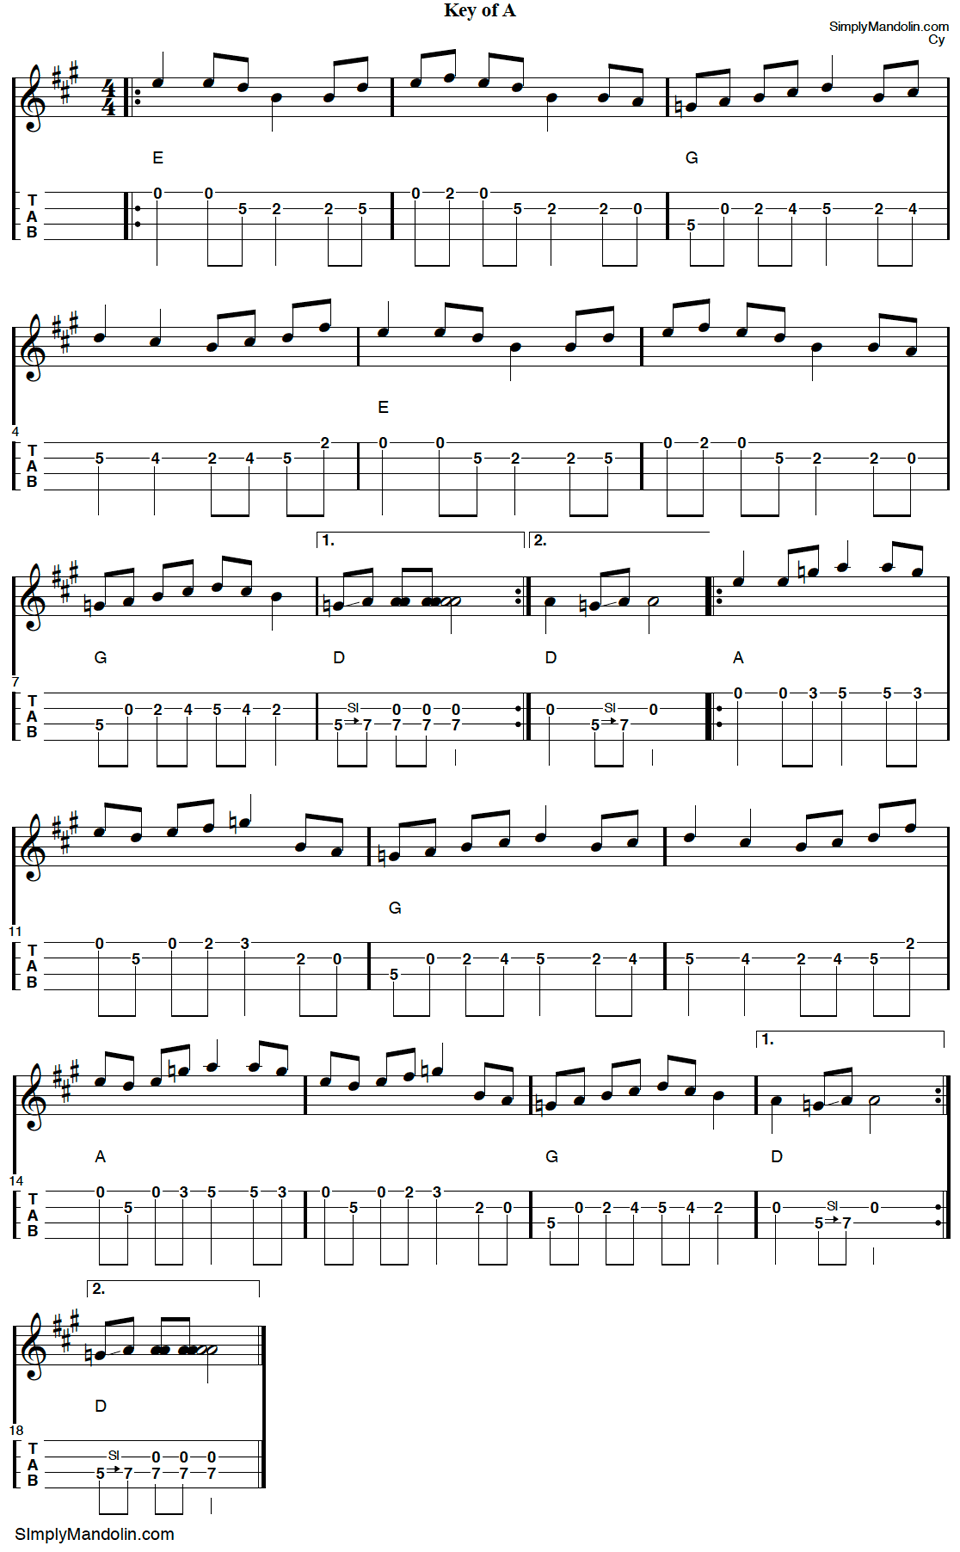 image of mandolin tablature for the bluegrass tune squirrel hunters.